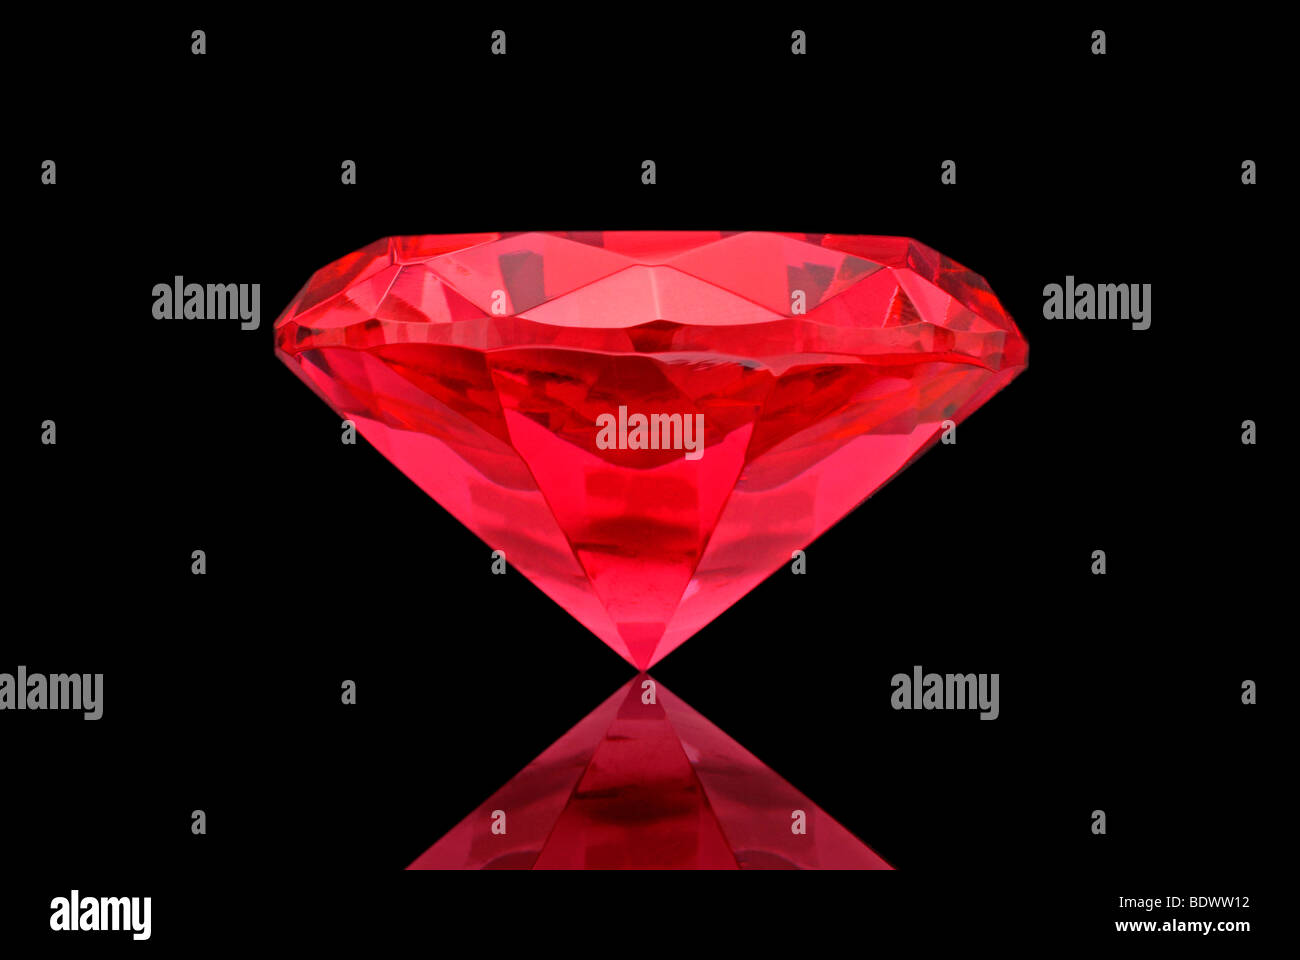 Red diamond on black Stock Photo